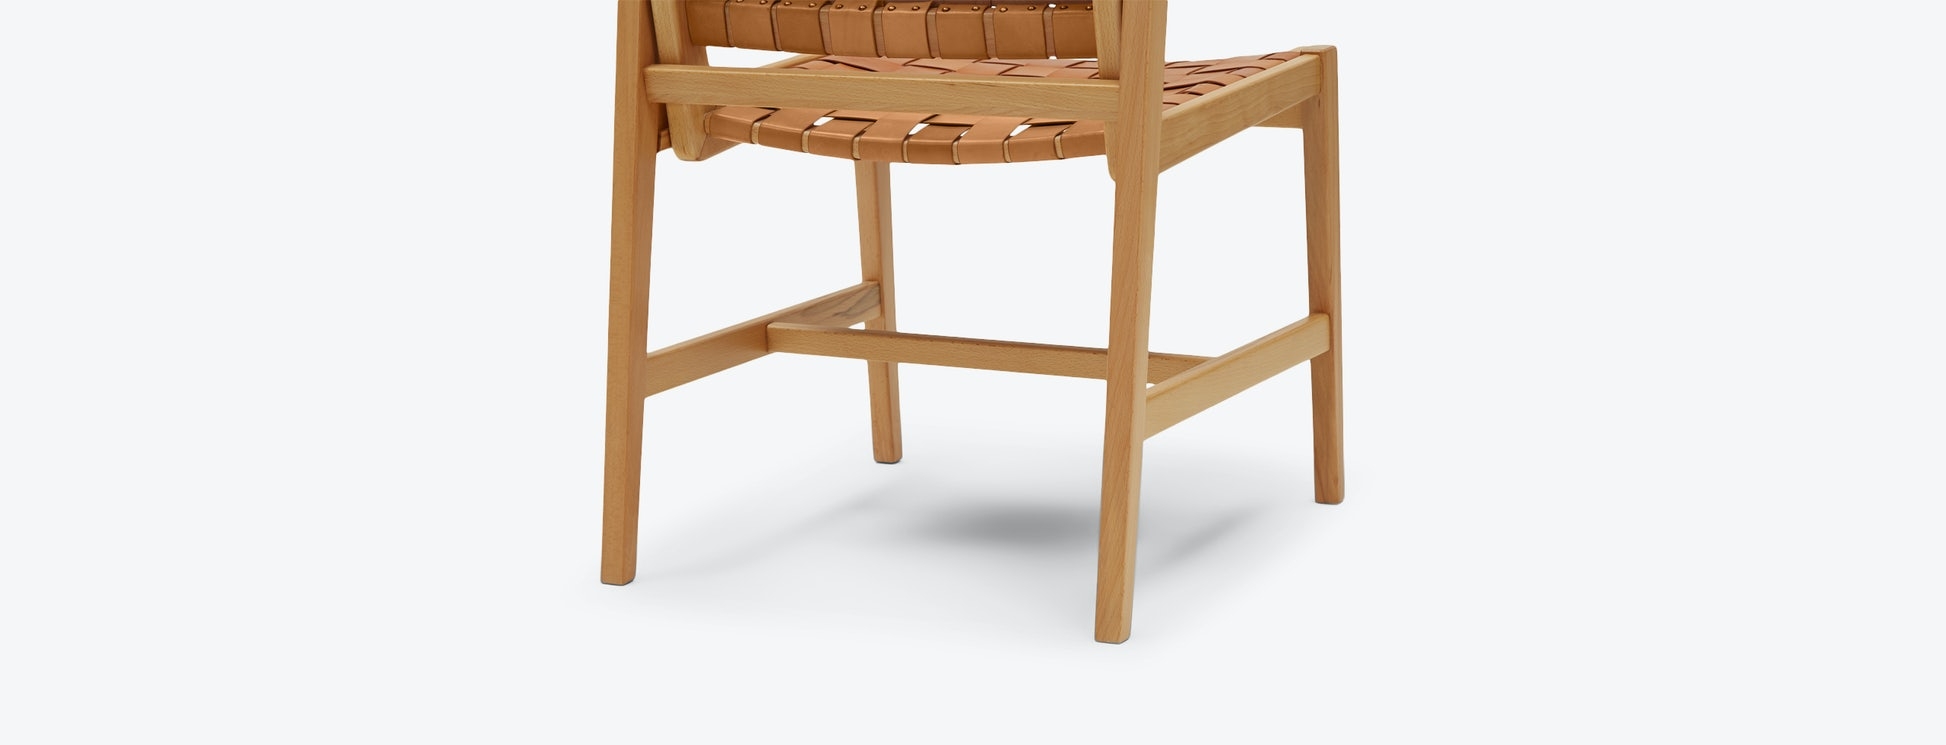 Lana Dining Arm Chair - Image 4